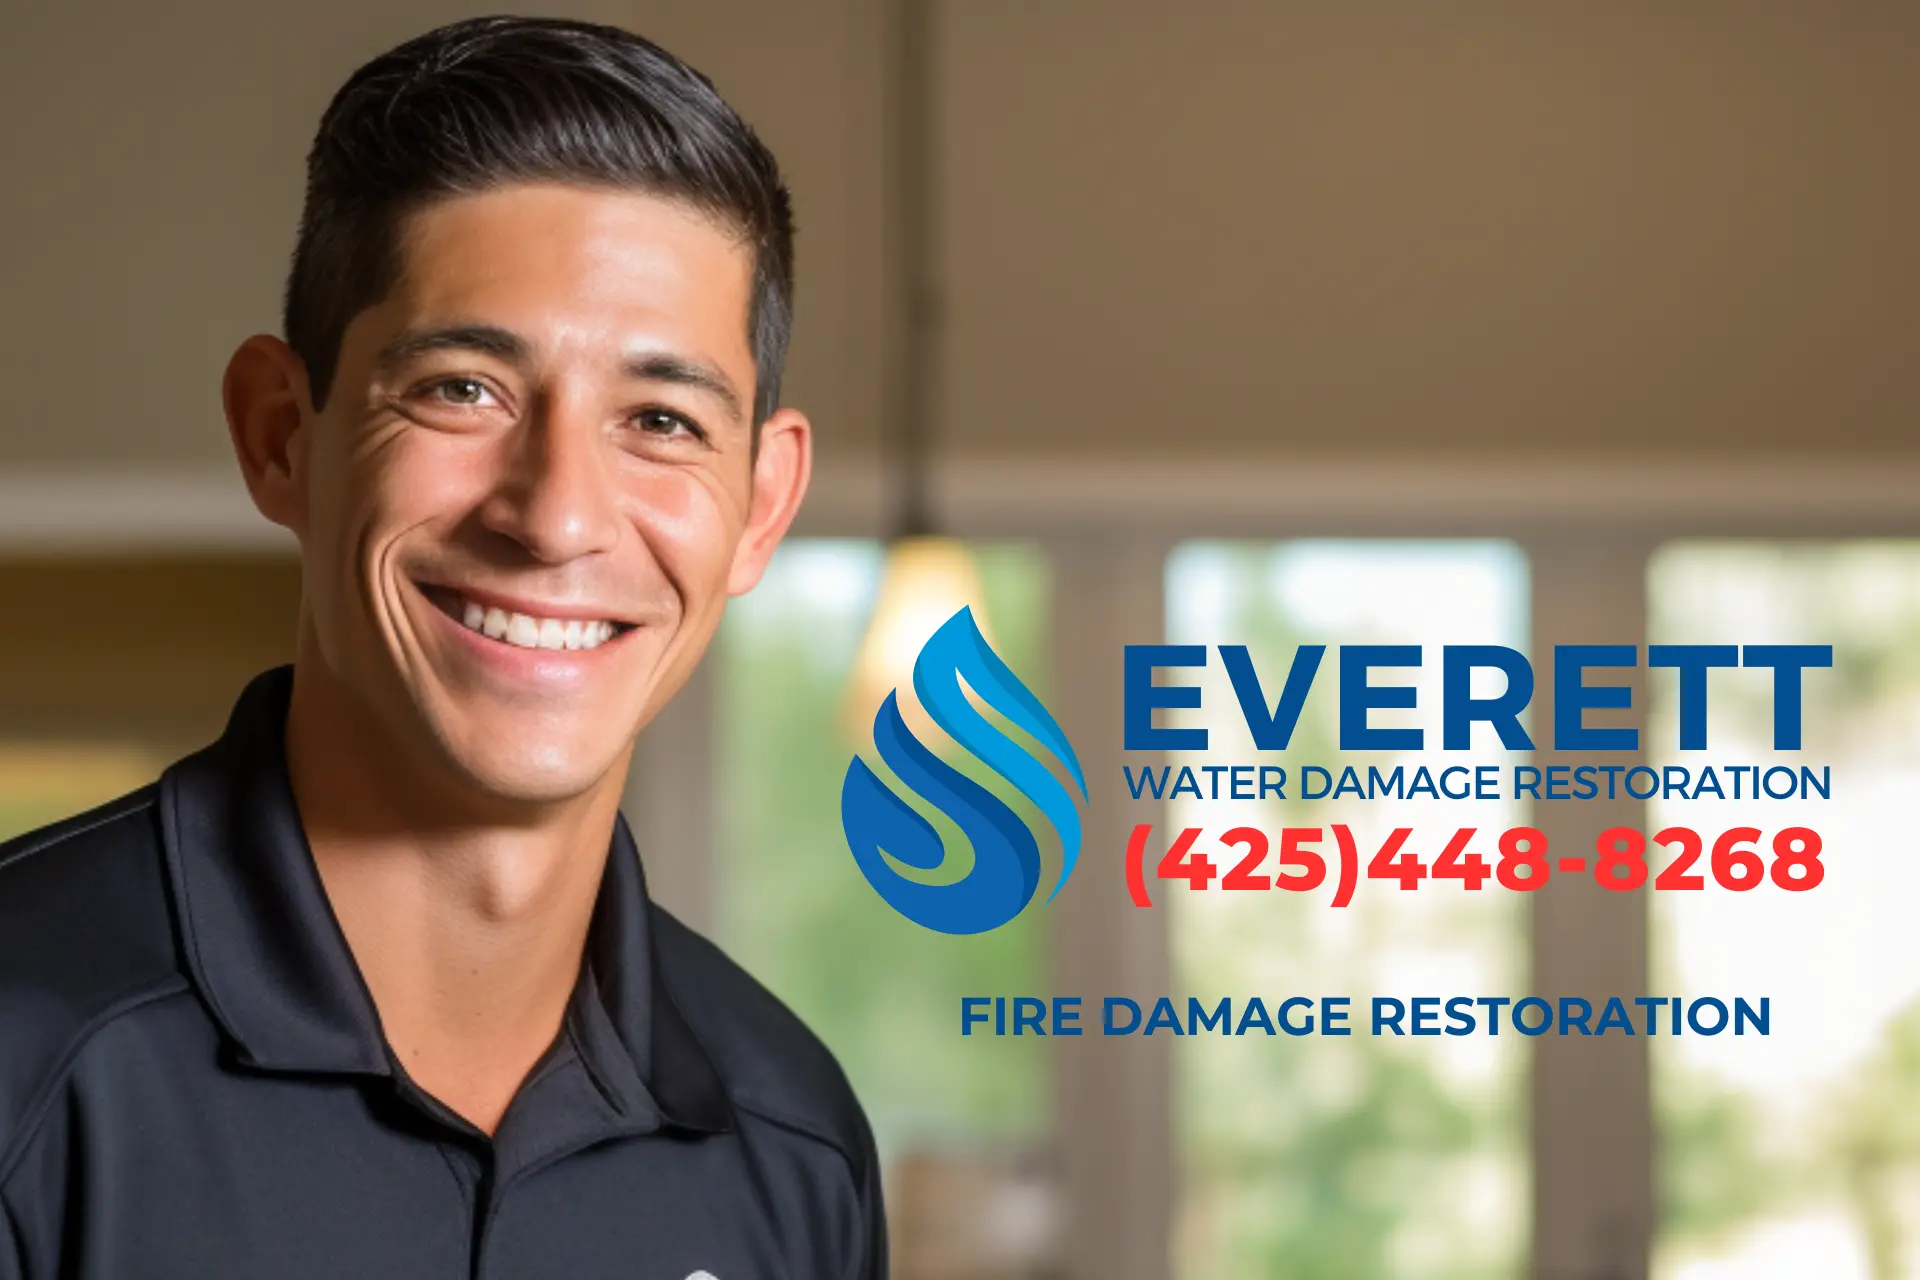 Fire Damage Restoration - Everett Water Damage Restoration